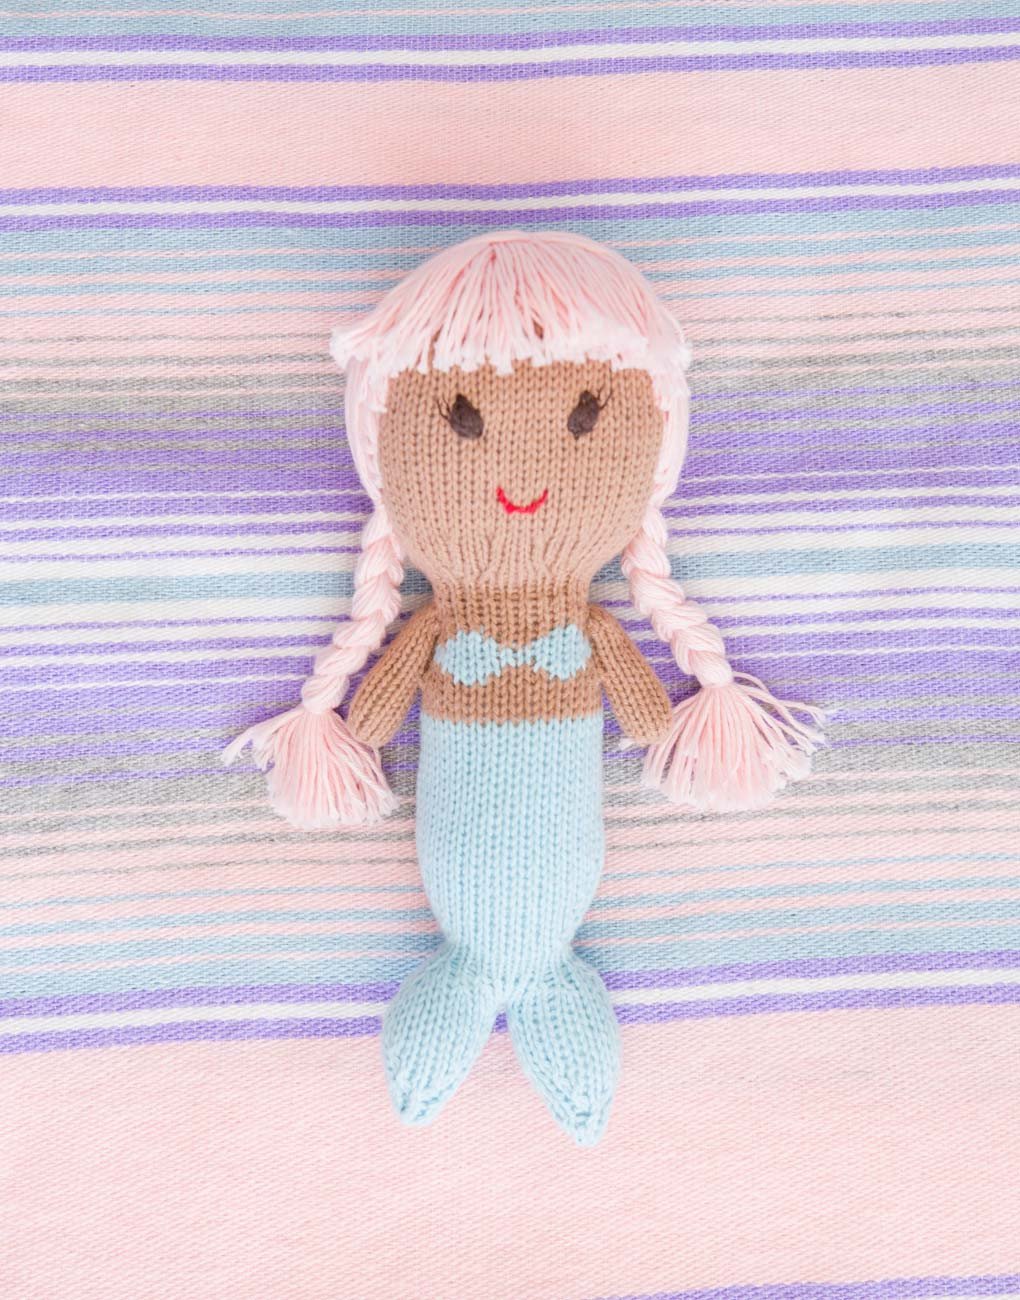 Mermaid-doll-with-pink-hair